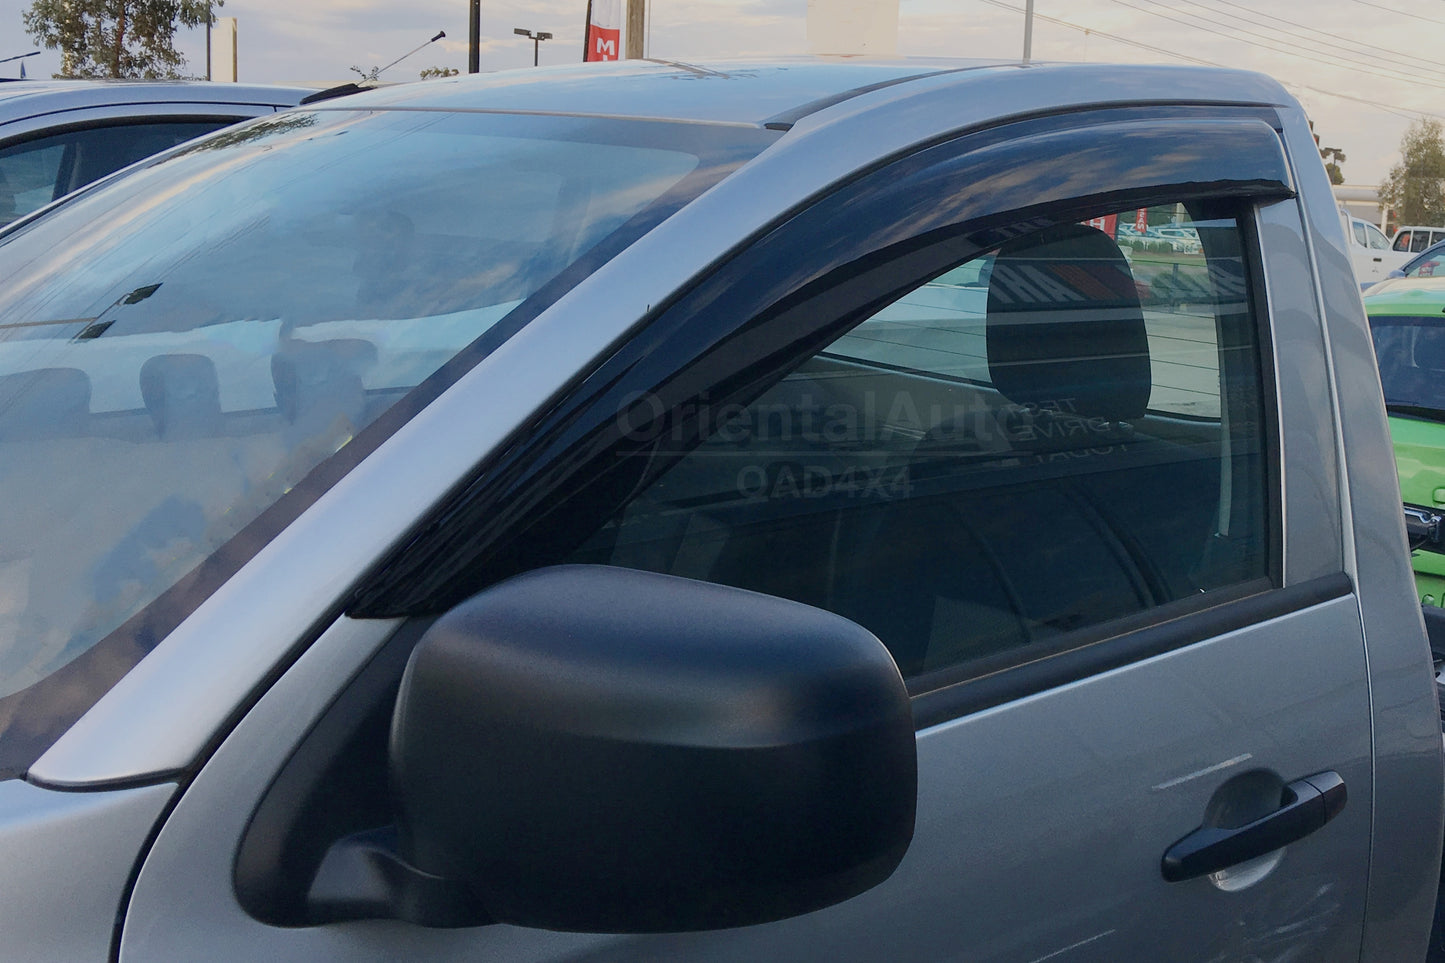 Injection Modeling Bonnet Protector & Injection Weathershield for Mitsubishi Triton MQ Single Cab 2015-2018 Weather Shields Window Visor + Hood Protector Bonnet Guard